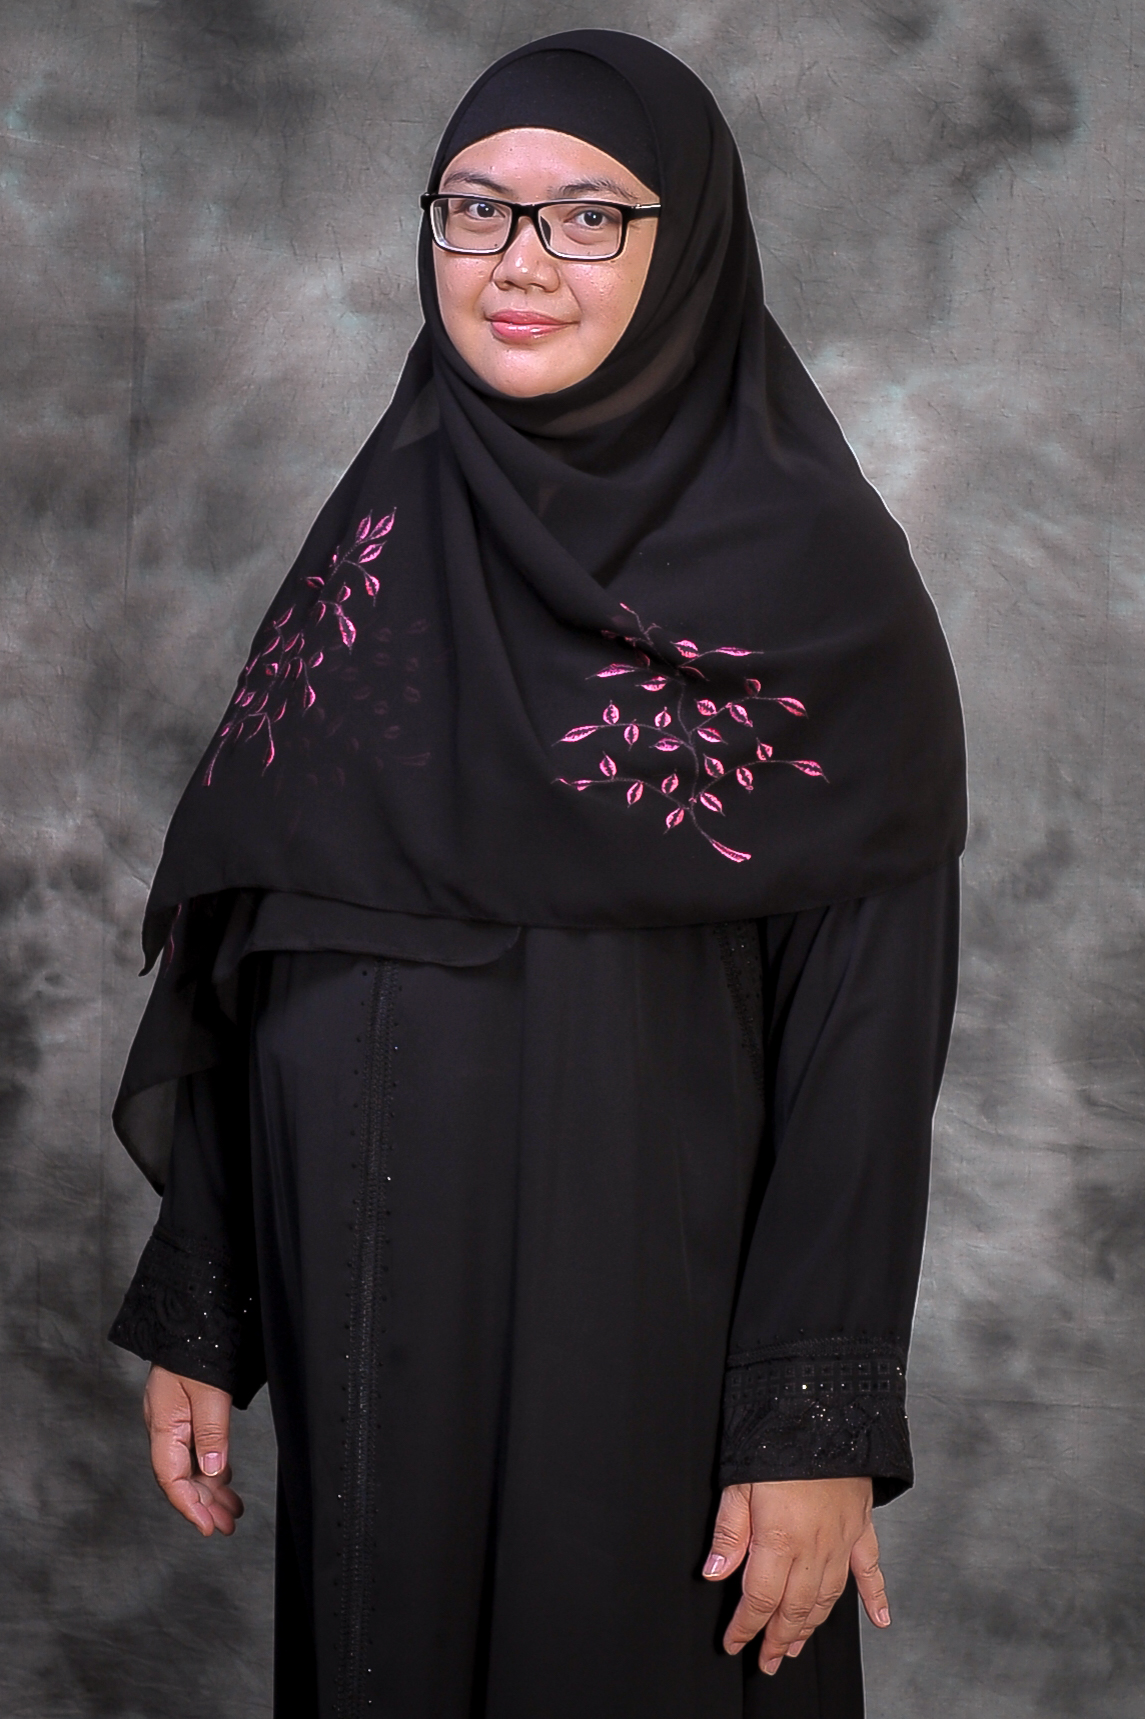 Assoc Prof Ir Dr Siti Noor Linda Talib